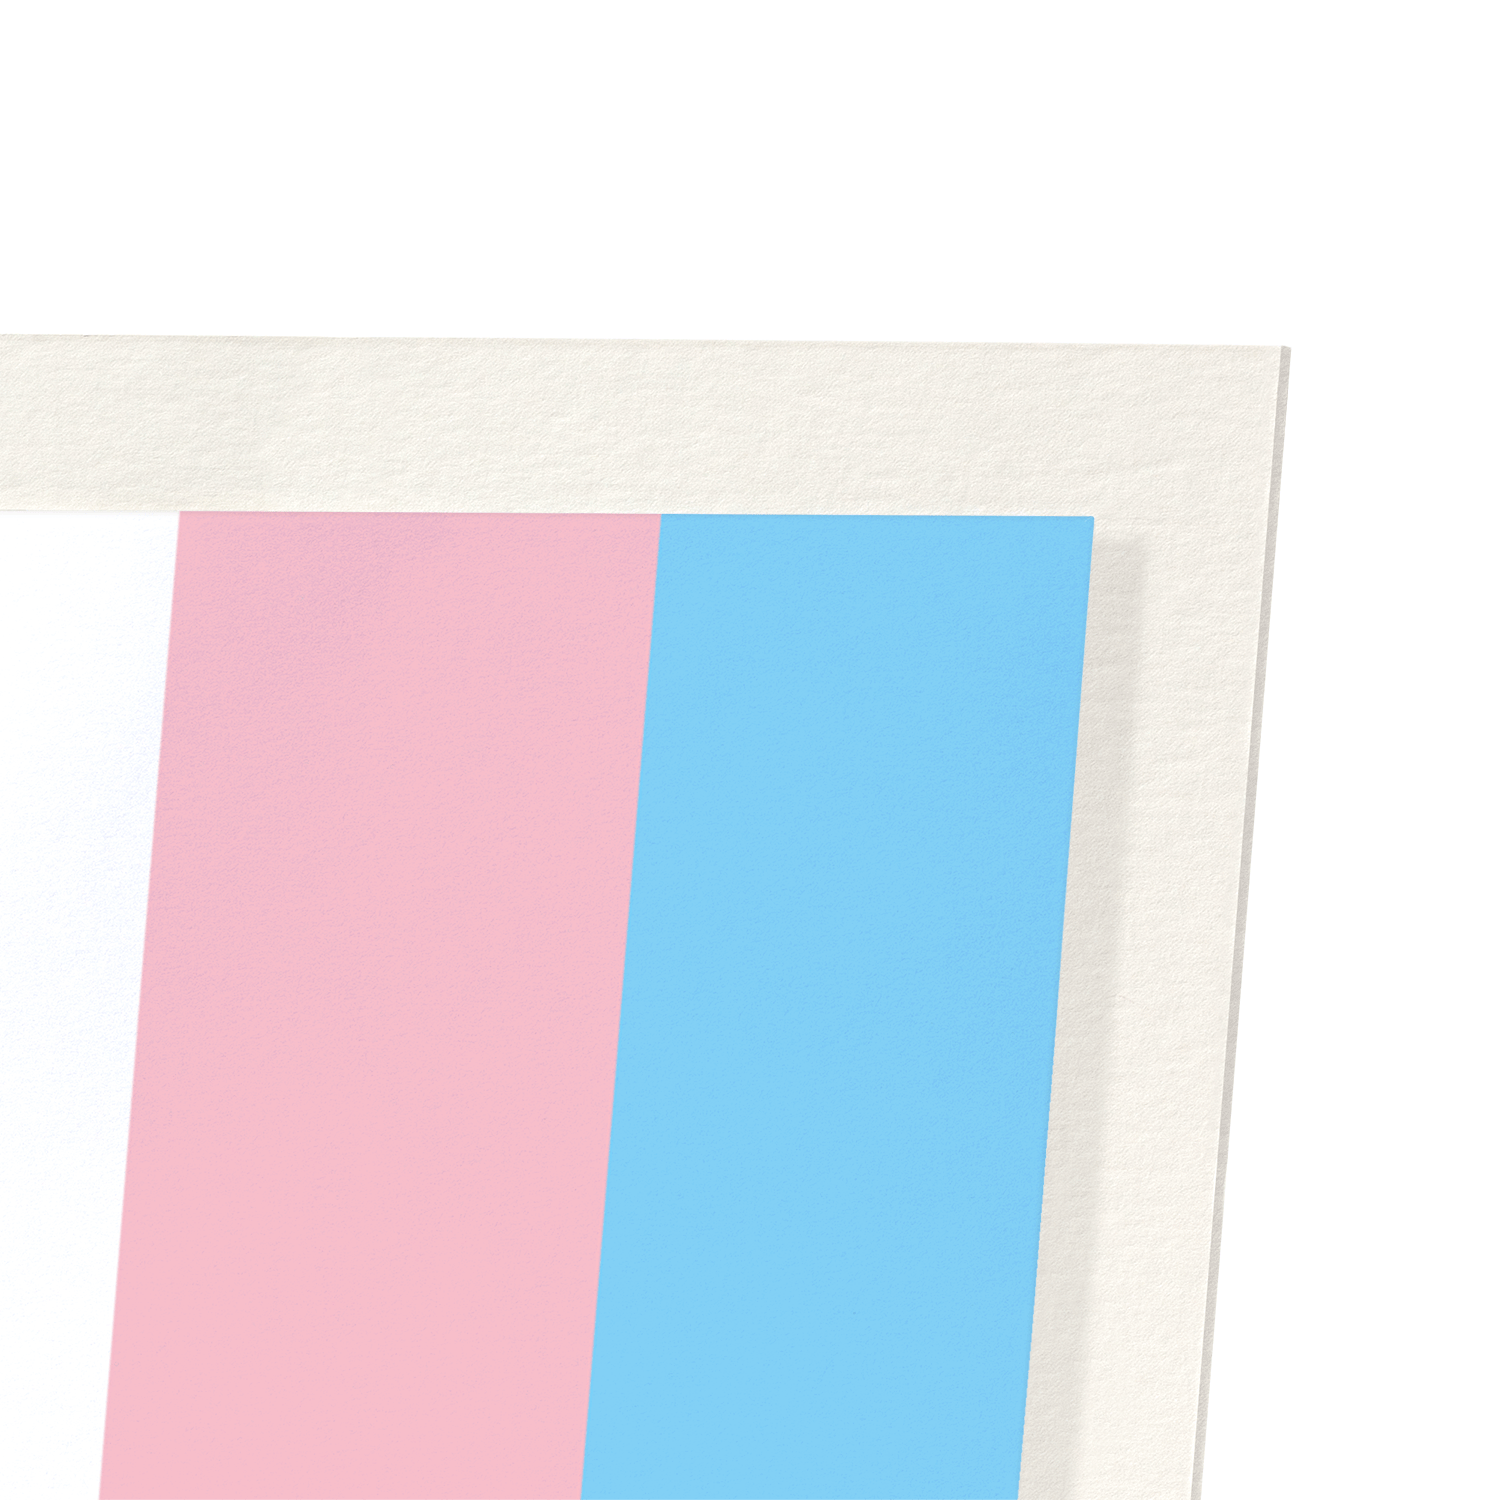 TRANSGENDER PRIDE FLAG: Colourblock Art Print